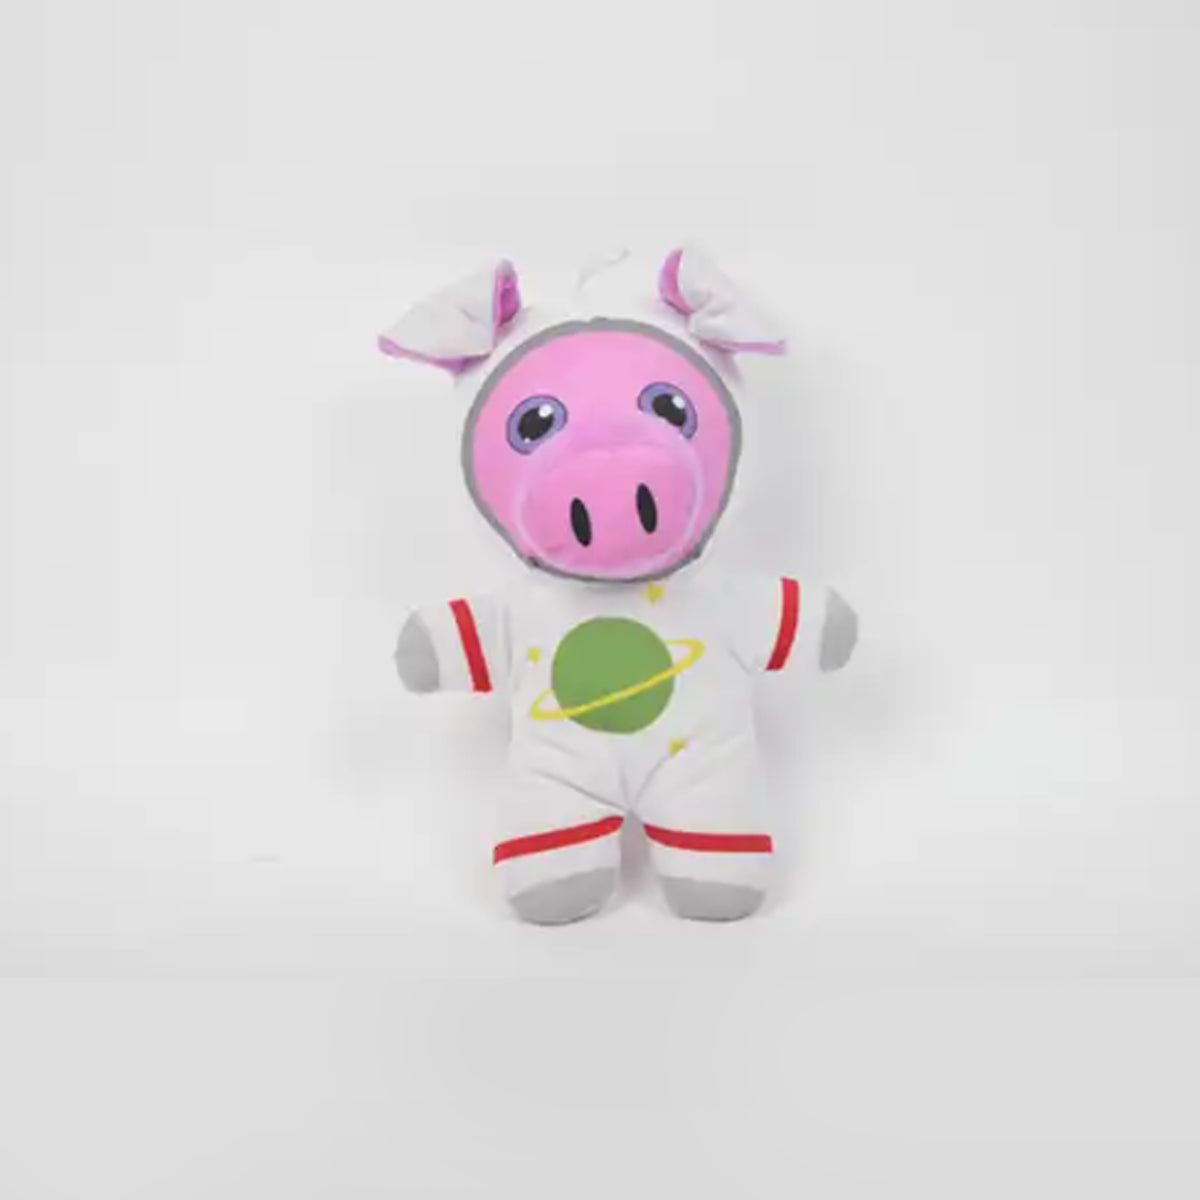 Decorative Cartoon Soft Plush Toy